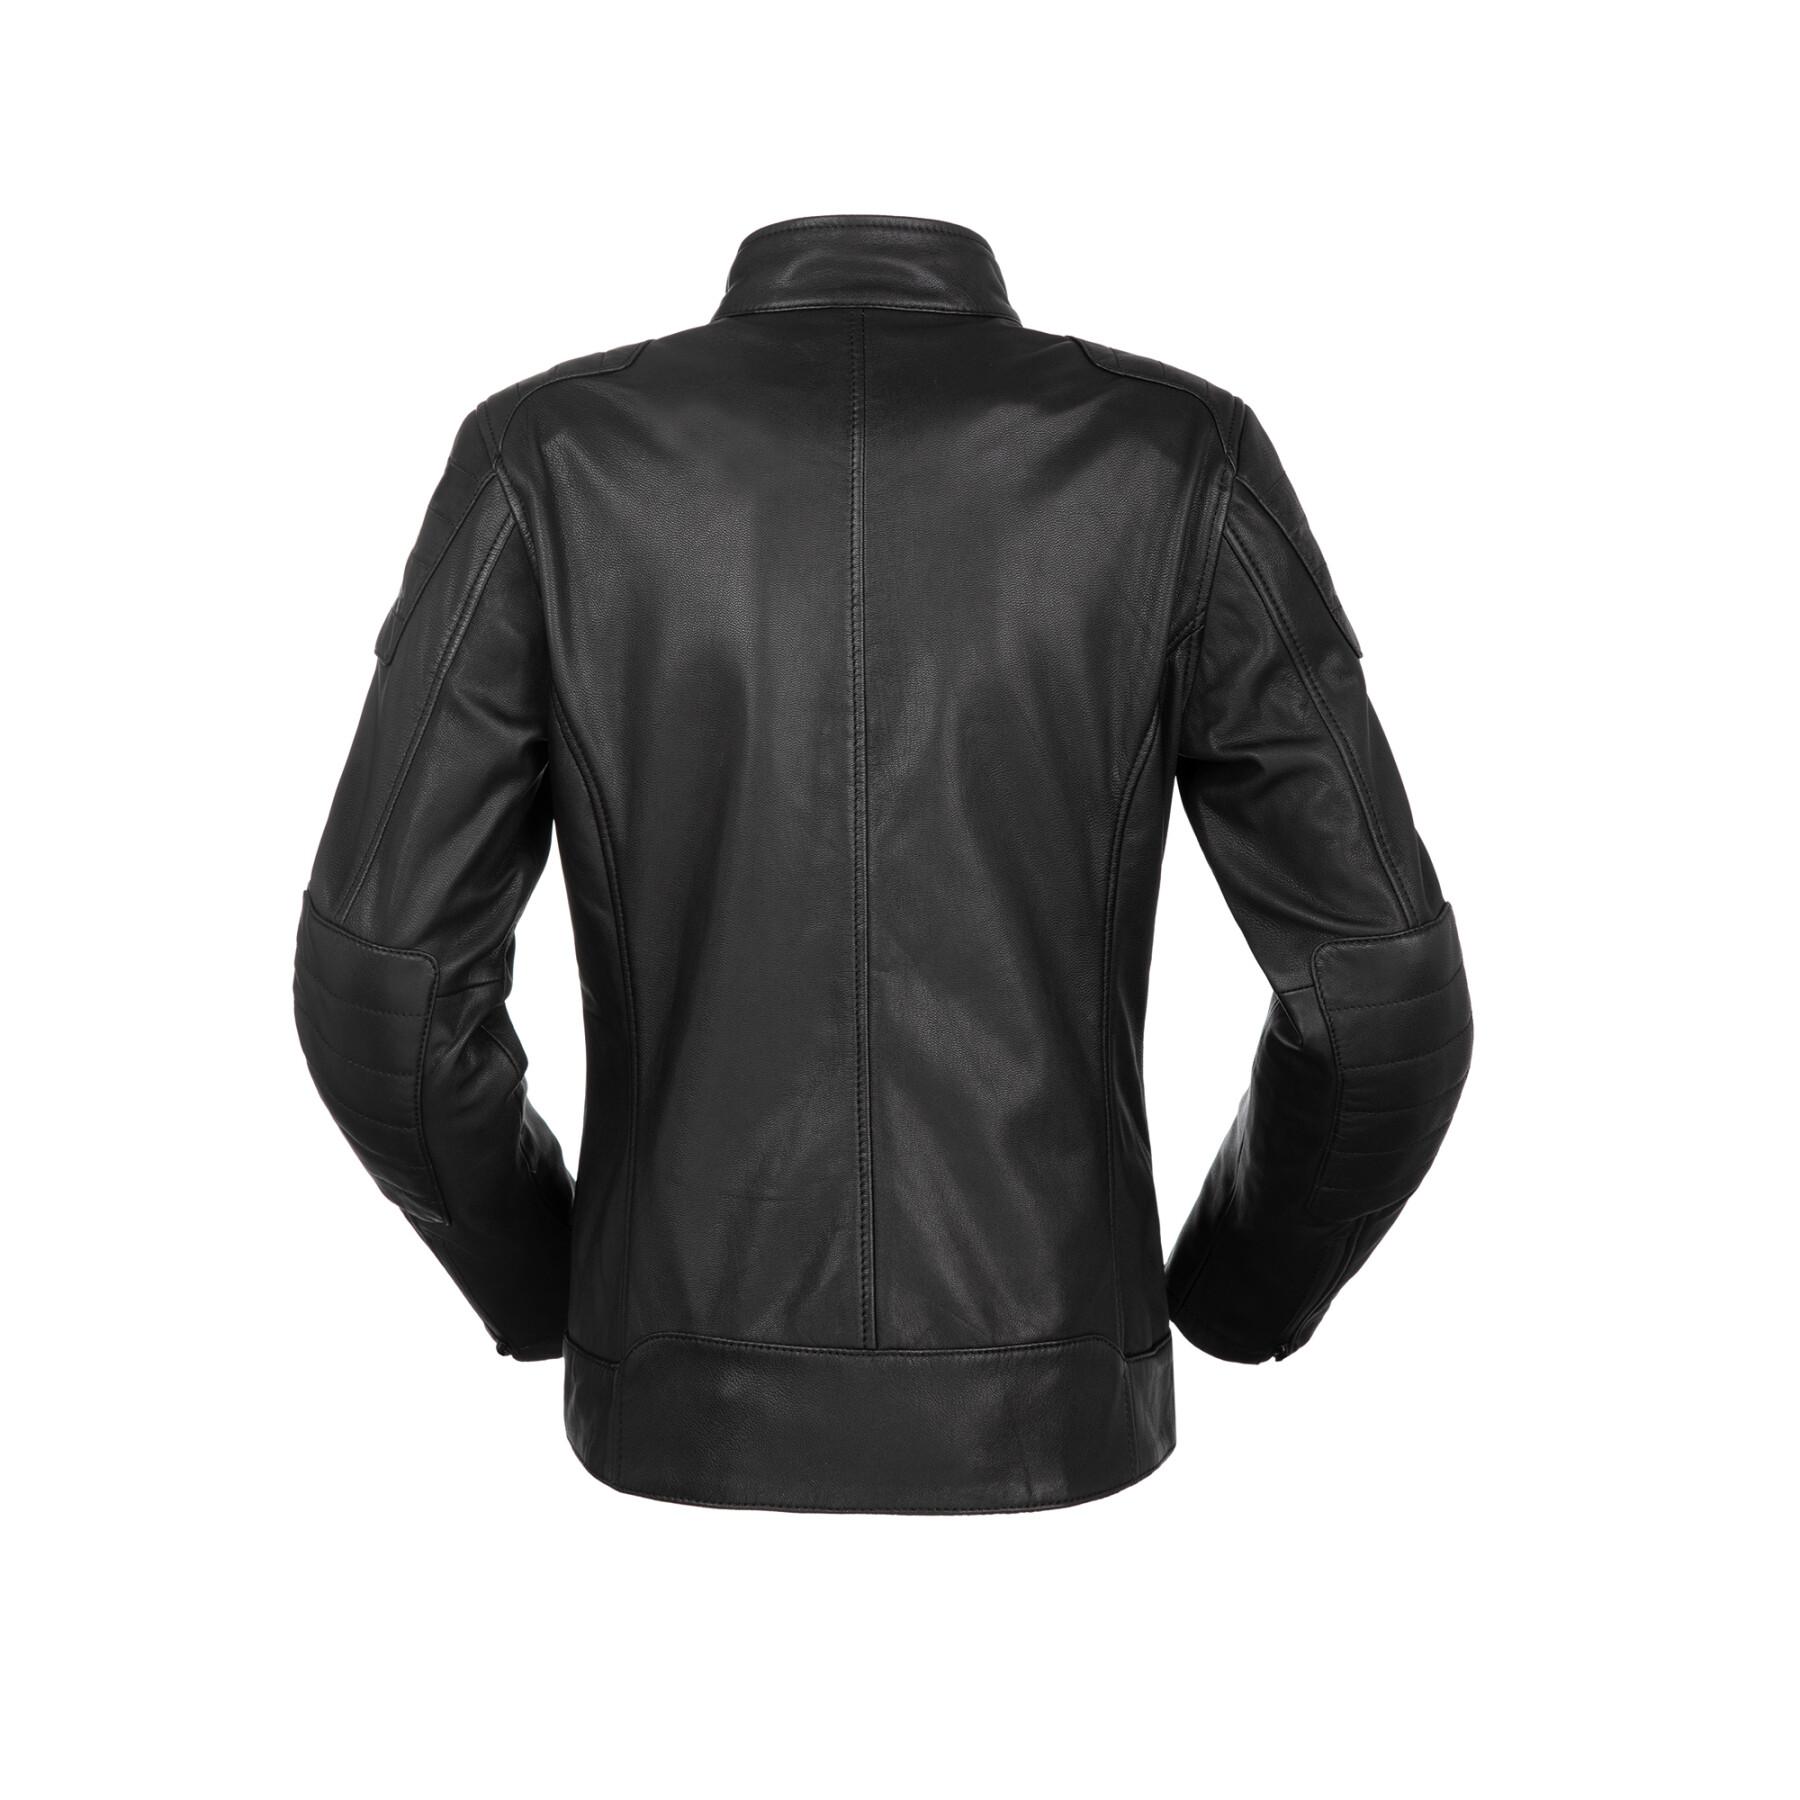 Women's motorcycle jacket Tucano Urbano pelette 2G